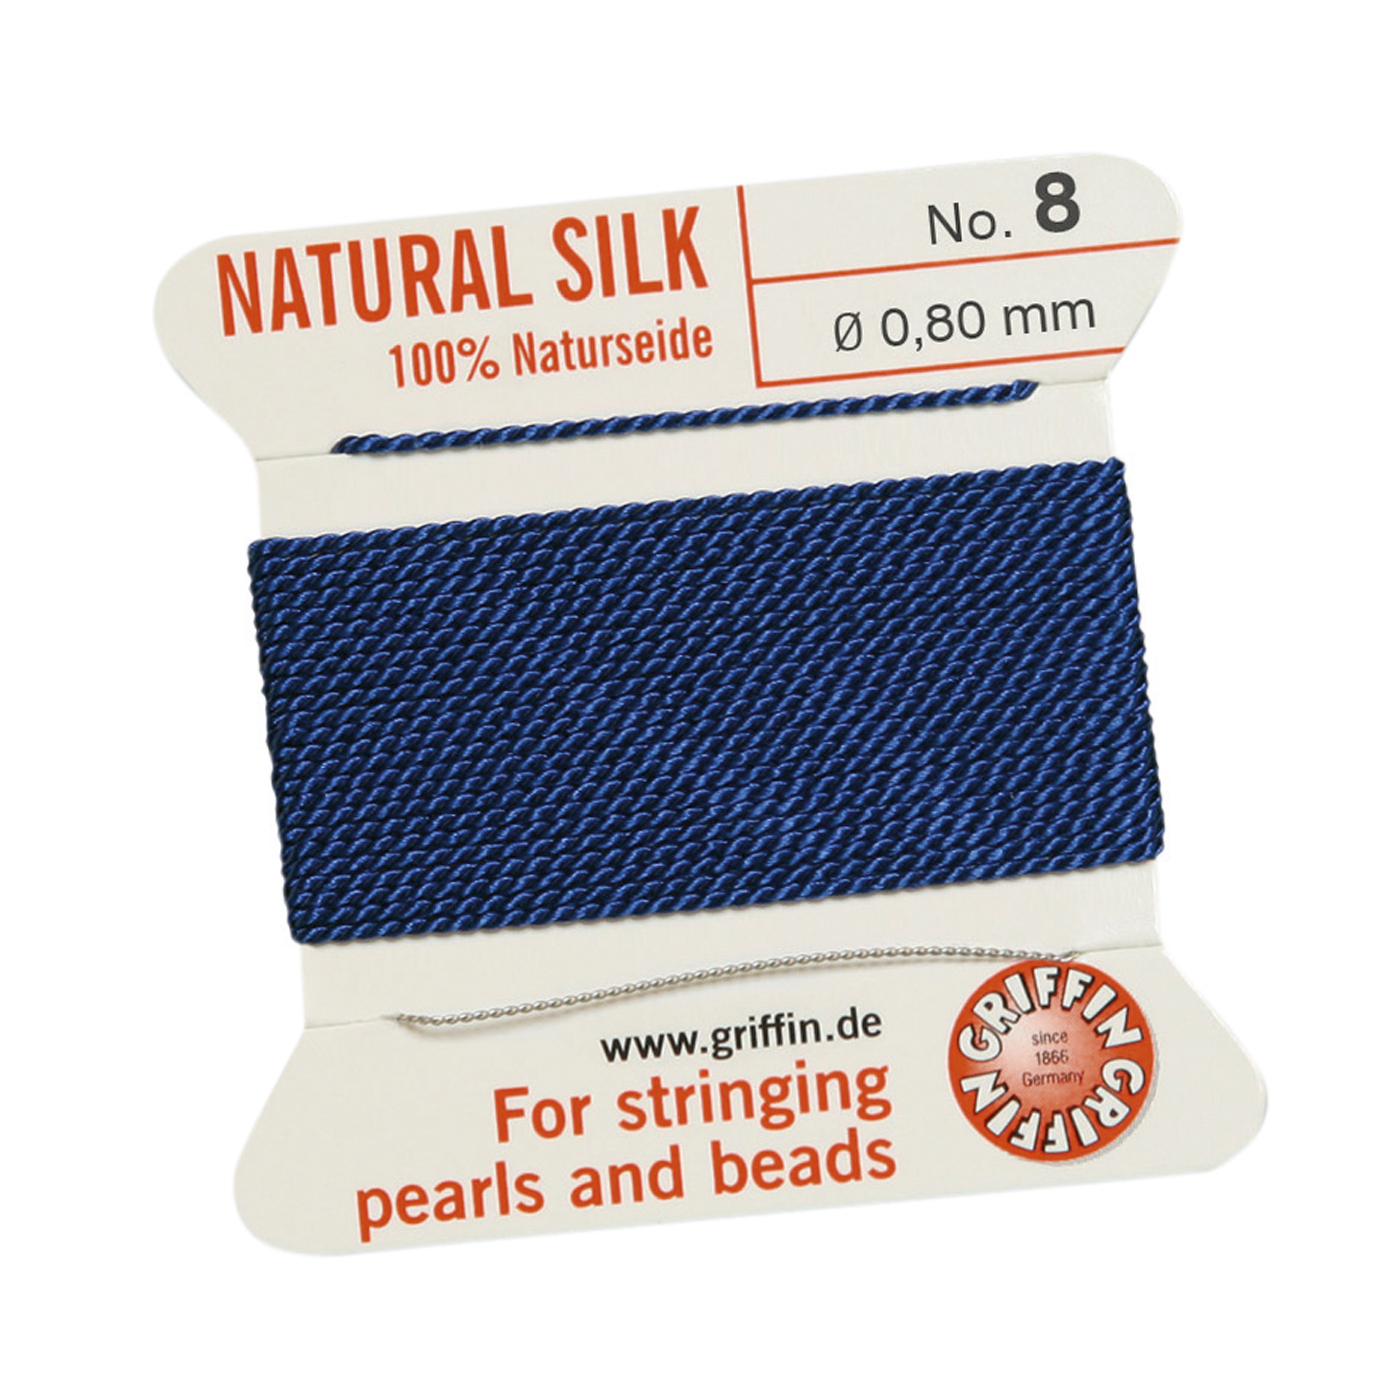 Bead Cord 100% Natural Silk, Dark Blue, No. 8 - 2 m